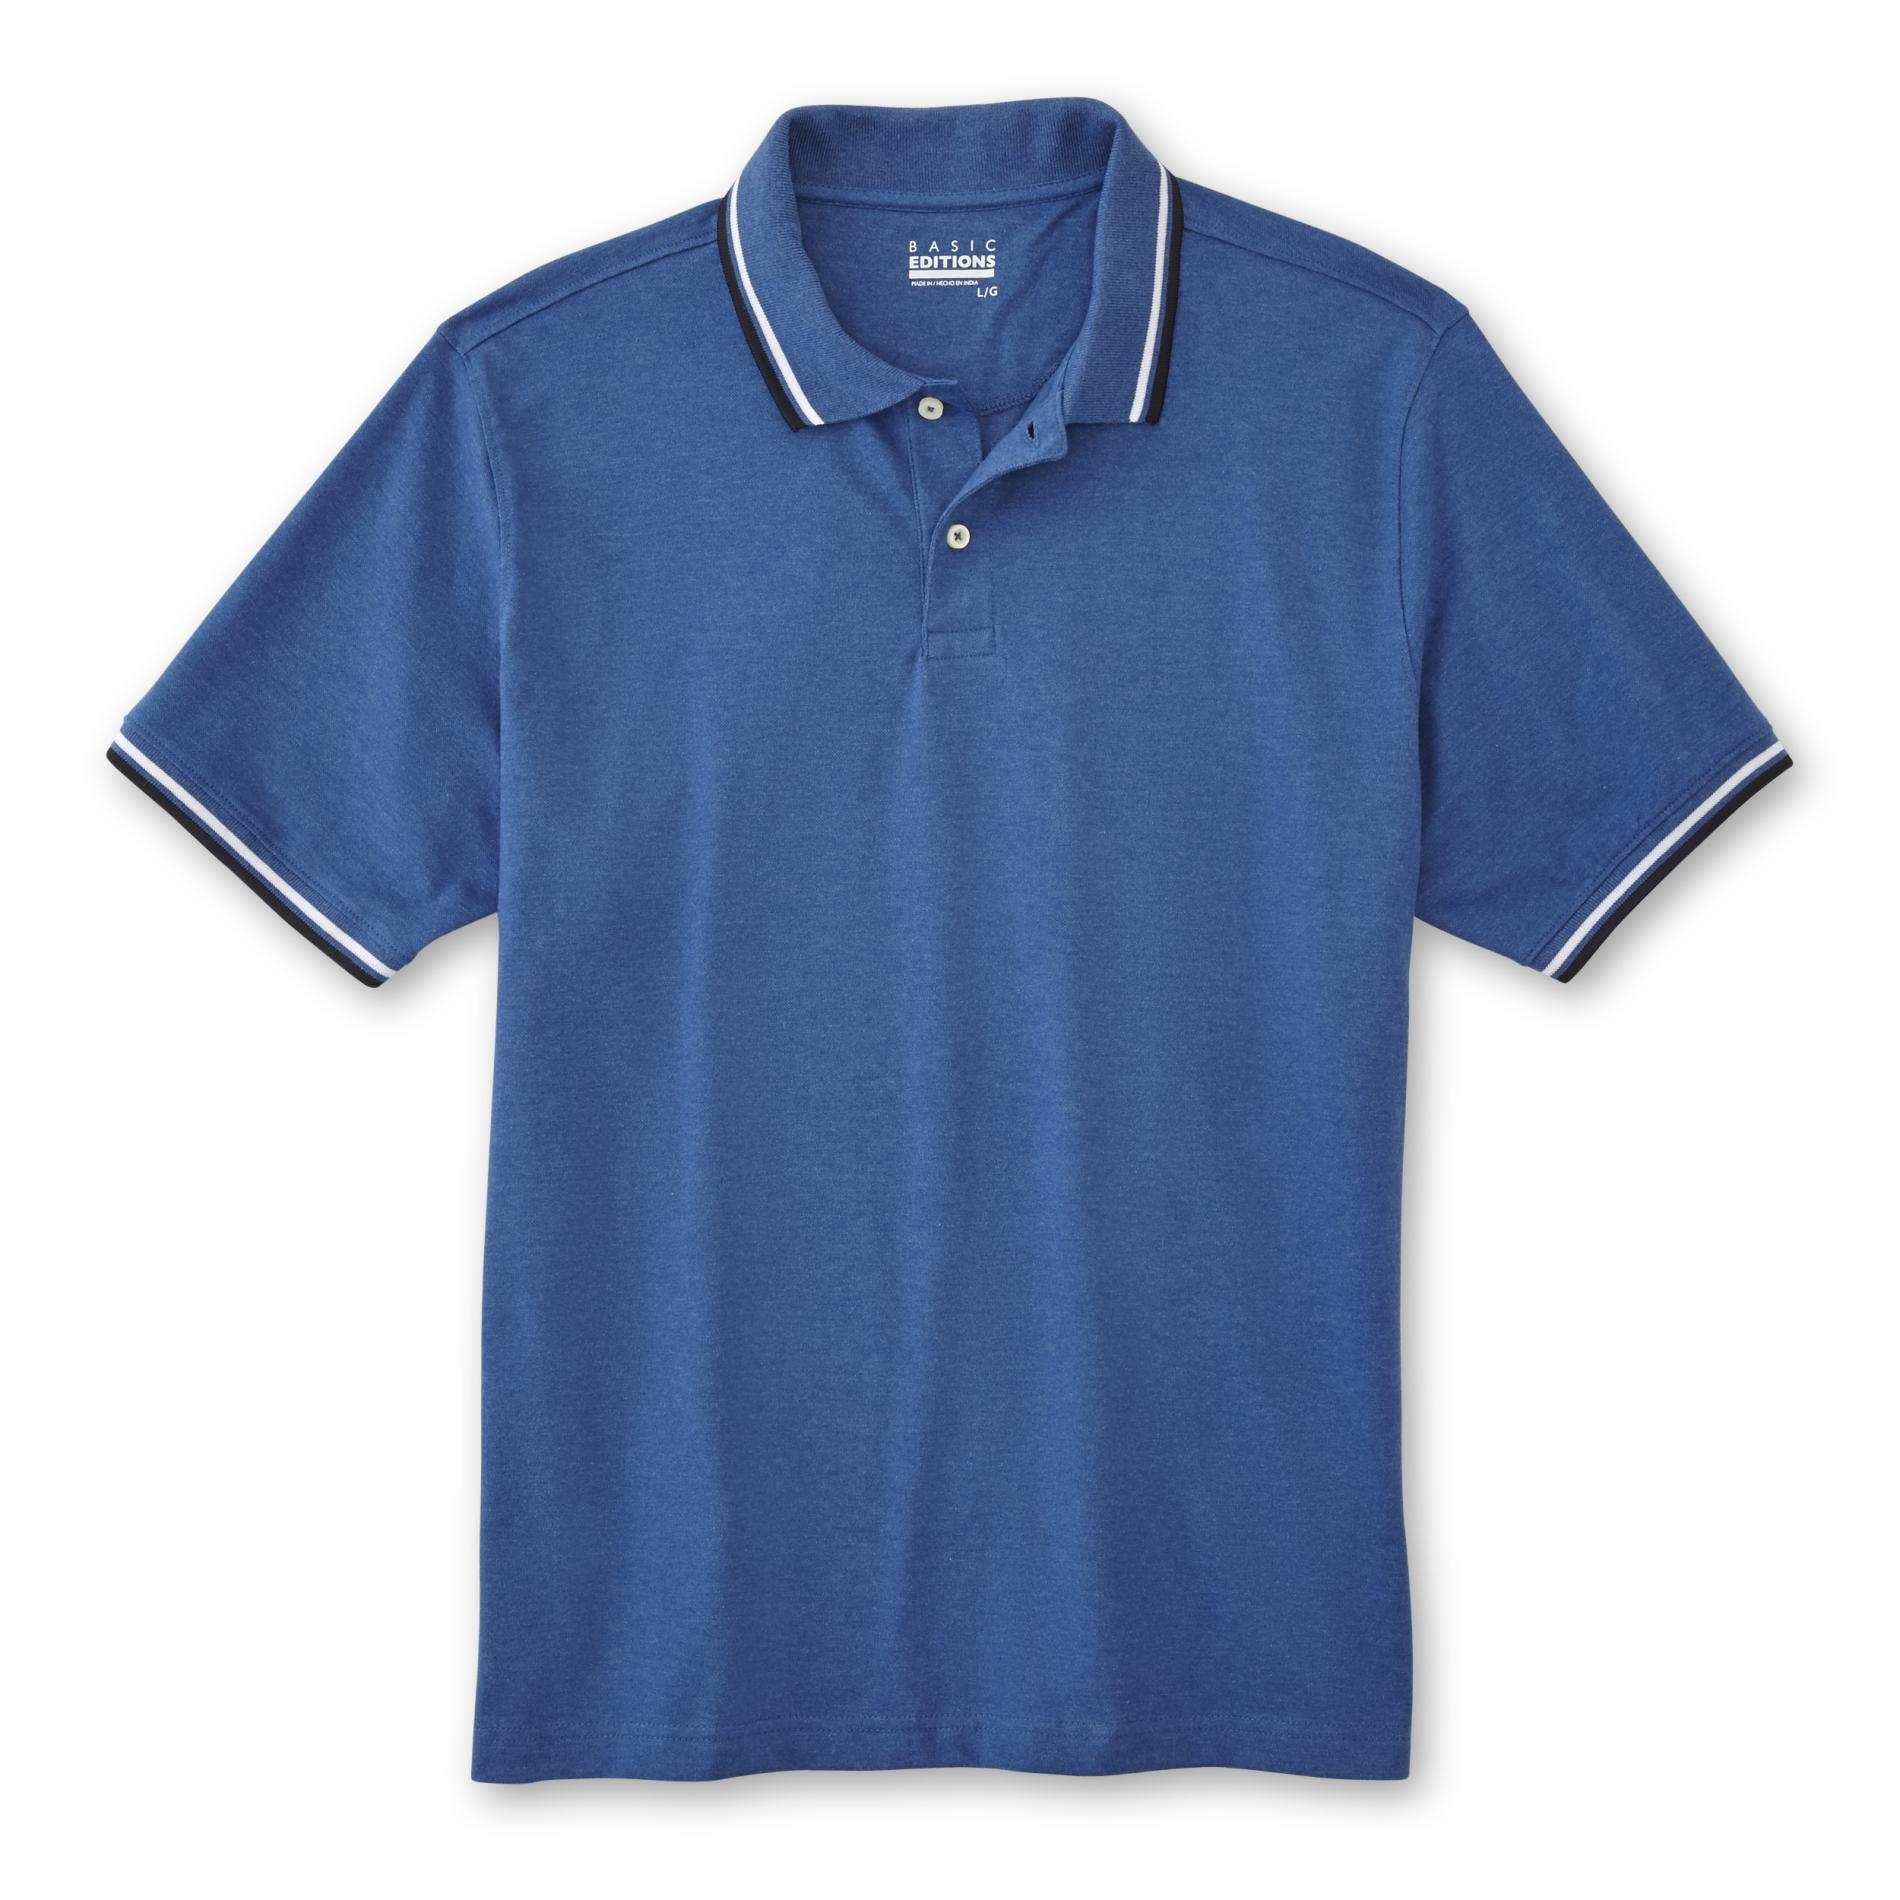 Basic Editions Men's Polo Shirt